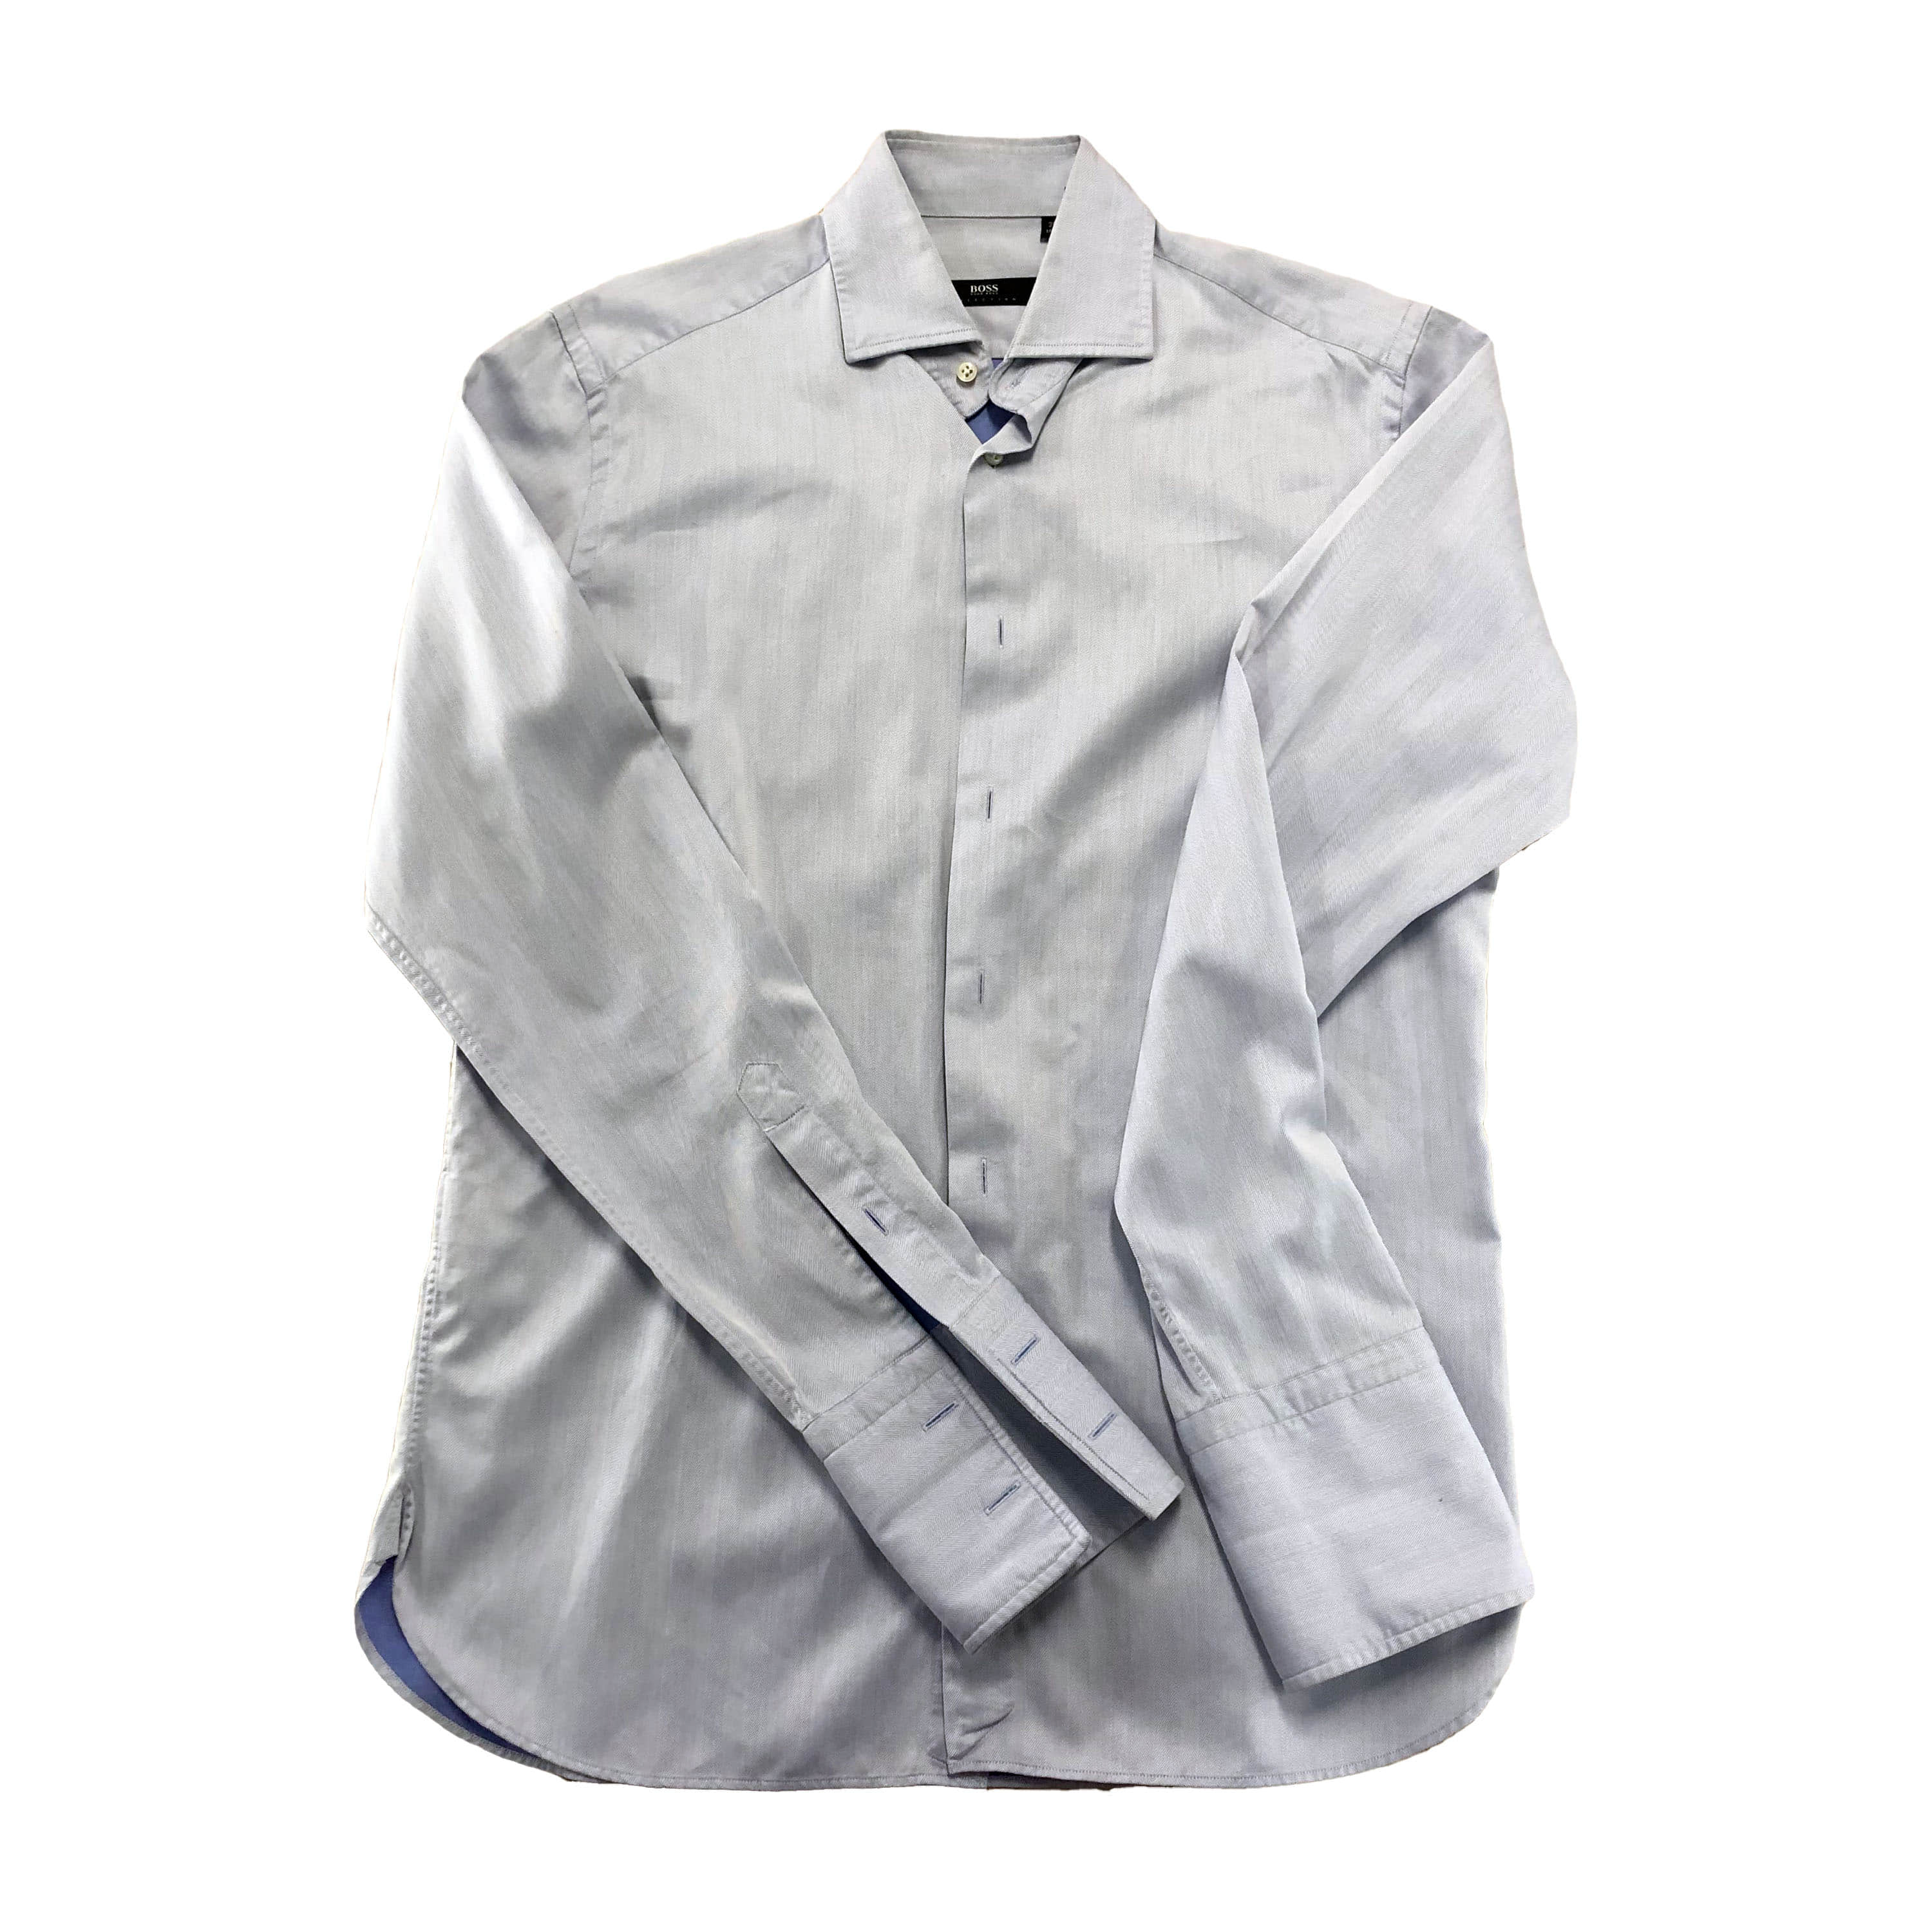 [BOSS] Lightblue Shirt w/ French Cuffs (Size 15.5)